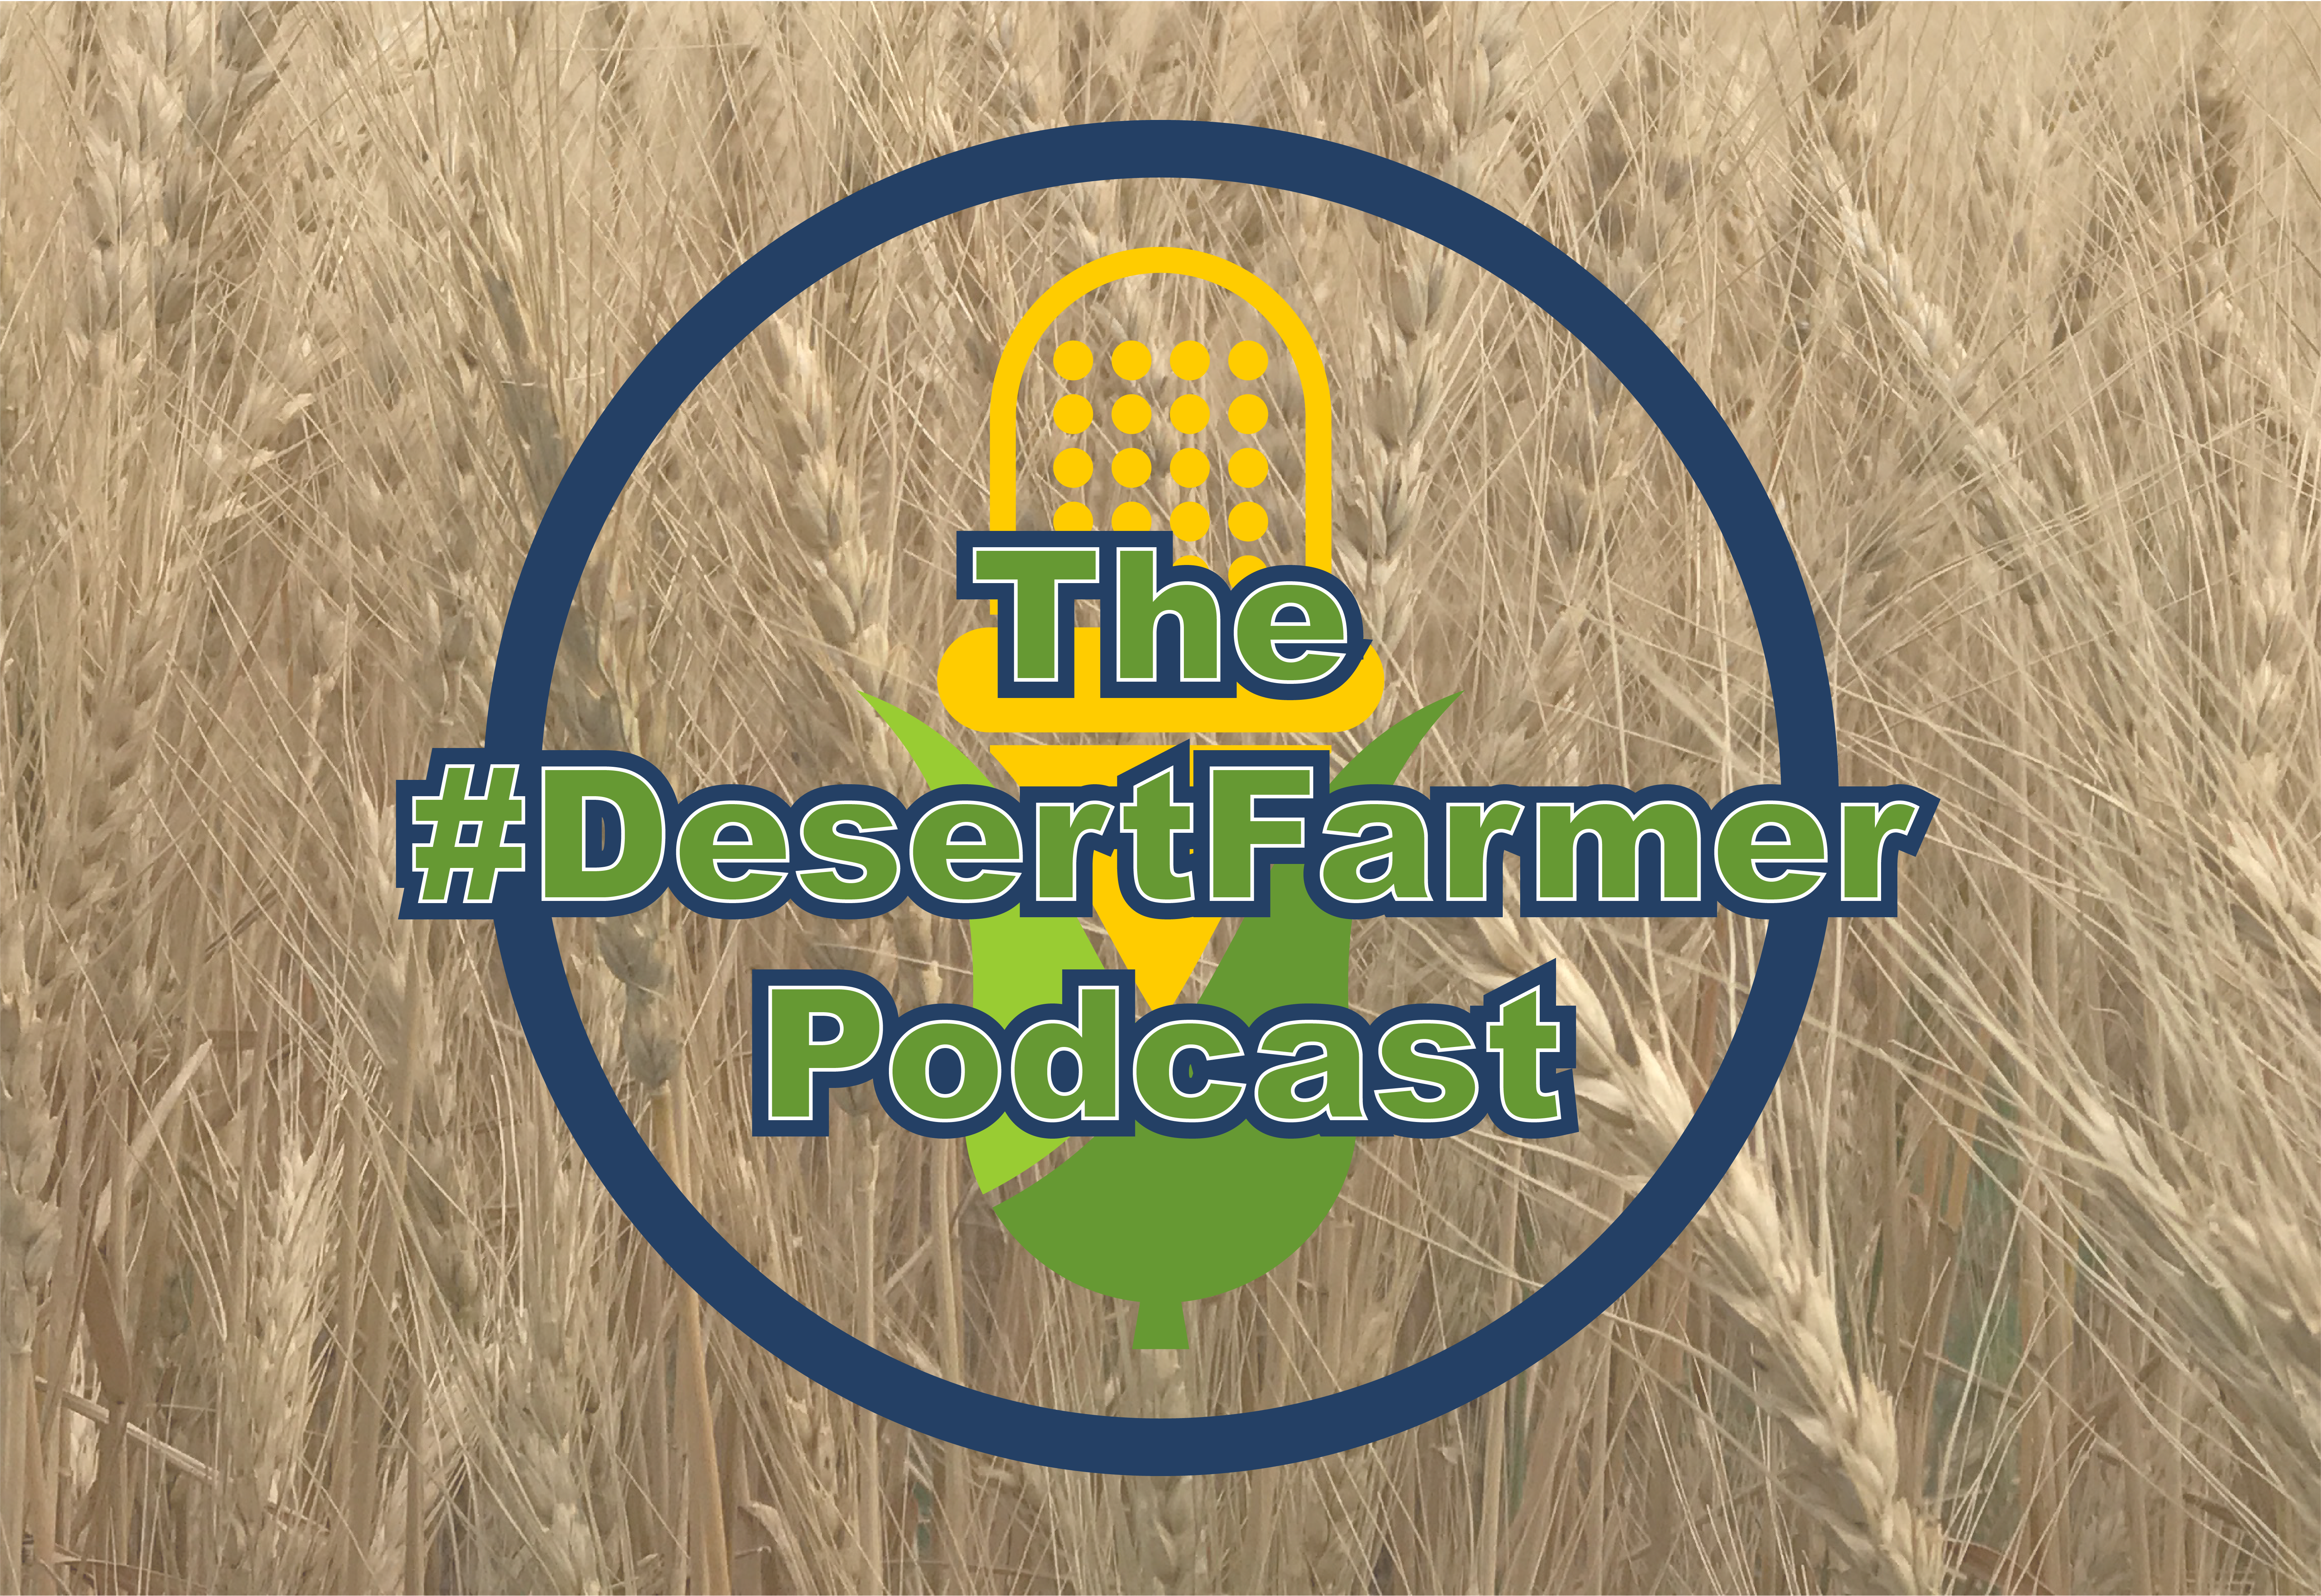 Logo for The #DesertFarmer Podcast over an image of ripe wheat